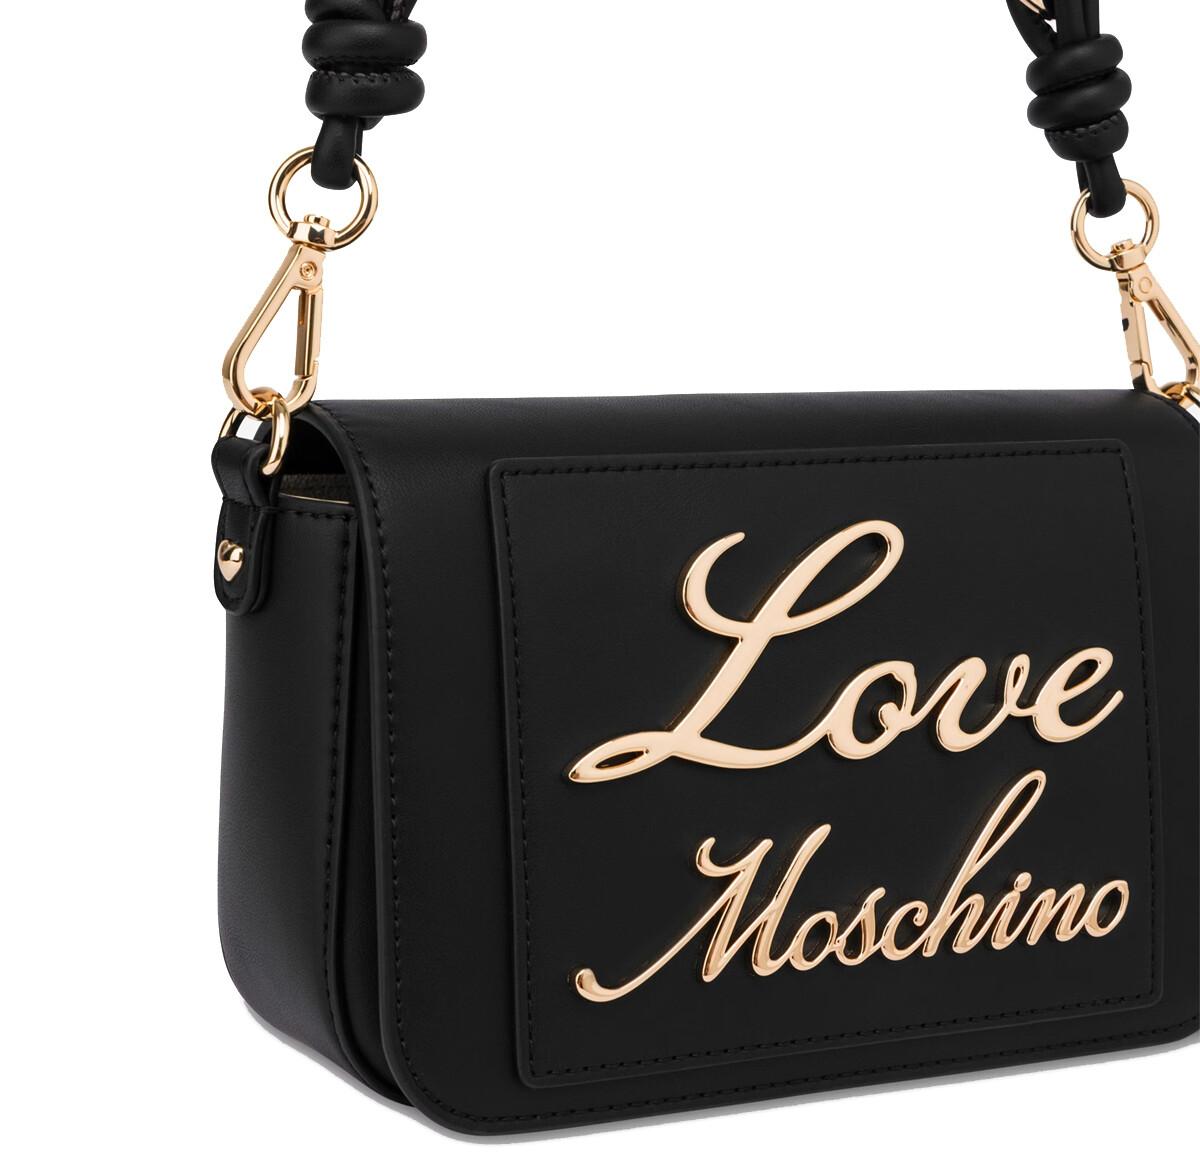 Love Moschino Women's Black Bag at FORZIERI Australia